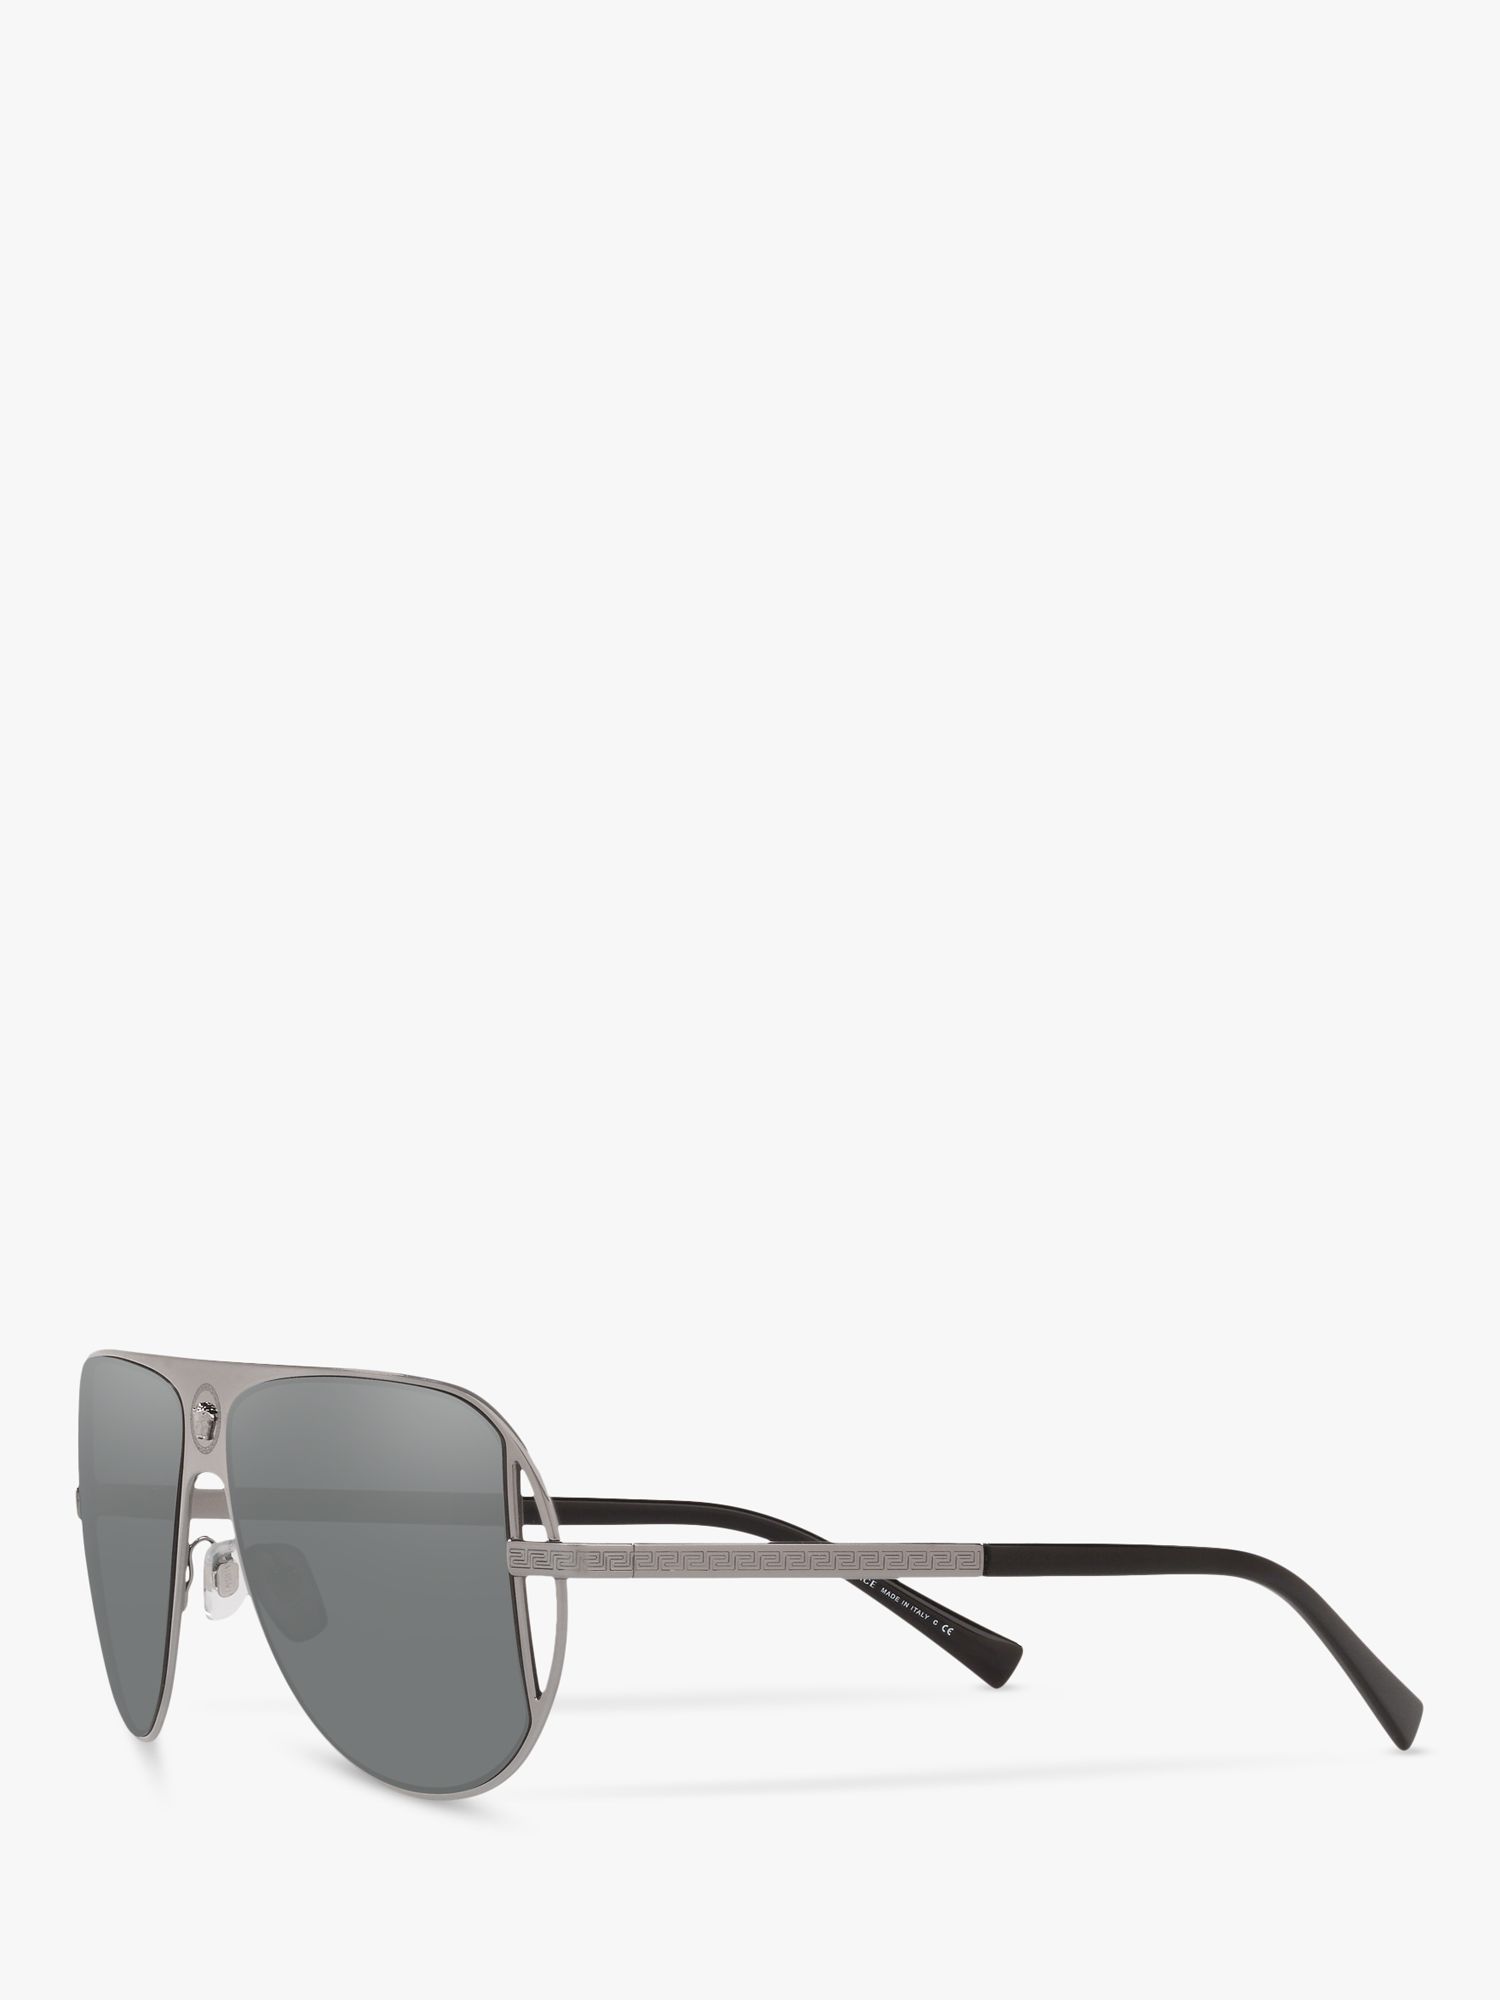 Versace VE2212 Men's Aviator Sunglasses, Silver/Grey at John Lewis & Partners